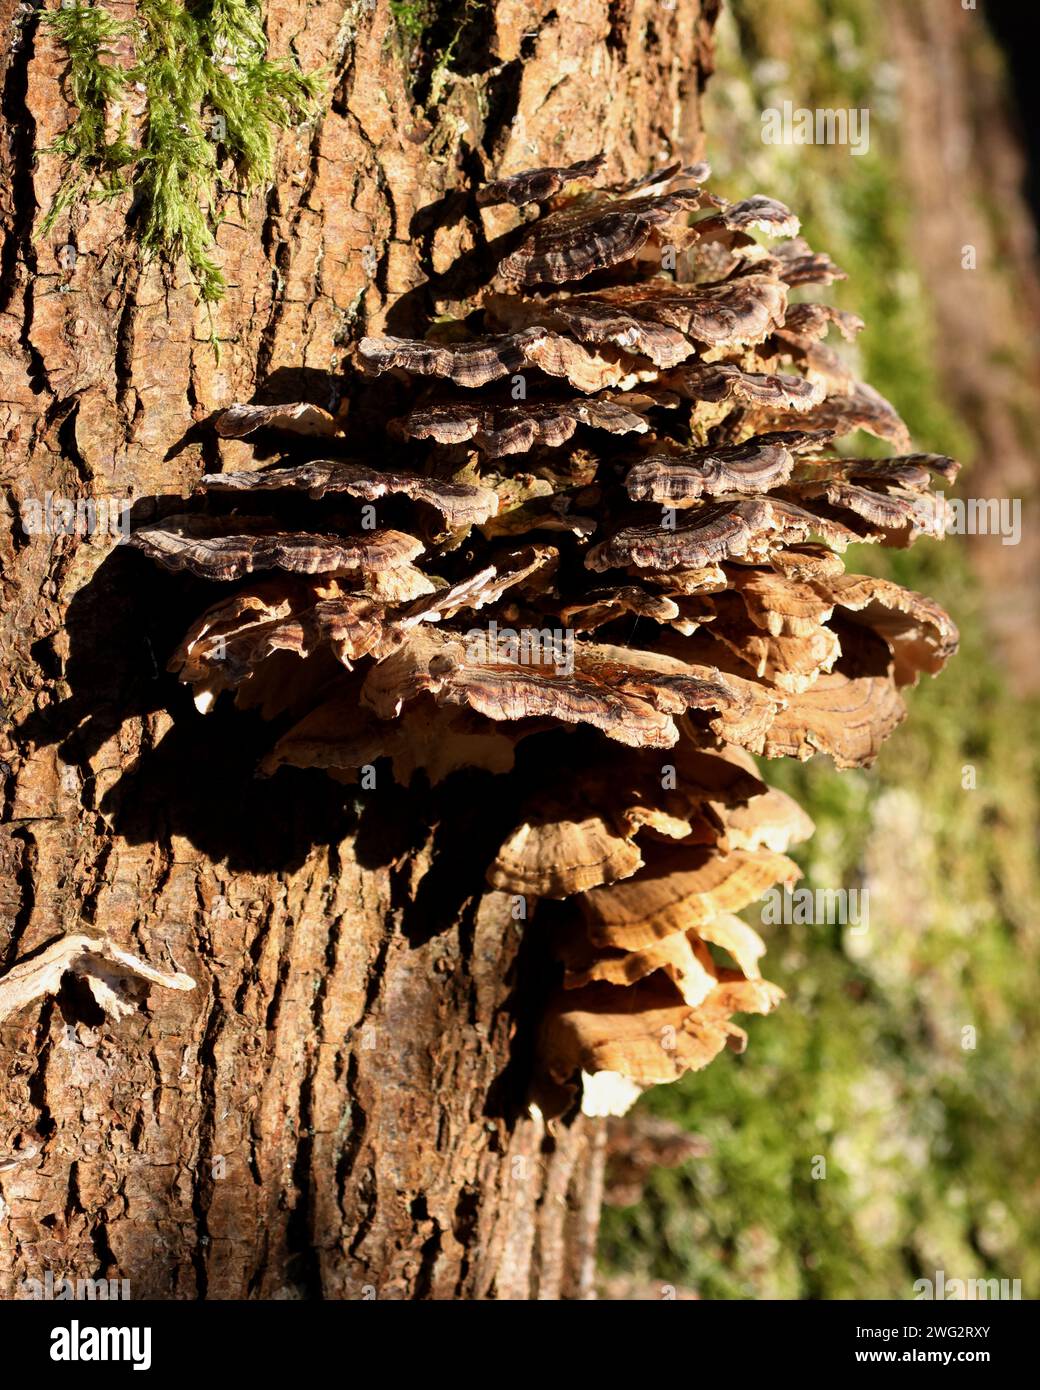 Turkeytail Fungus (Trametes versicolor) on a tree stump Stock Photo